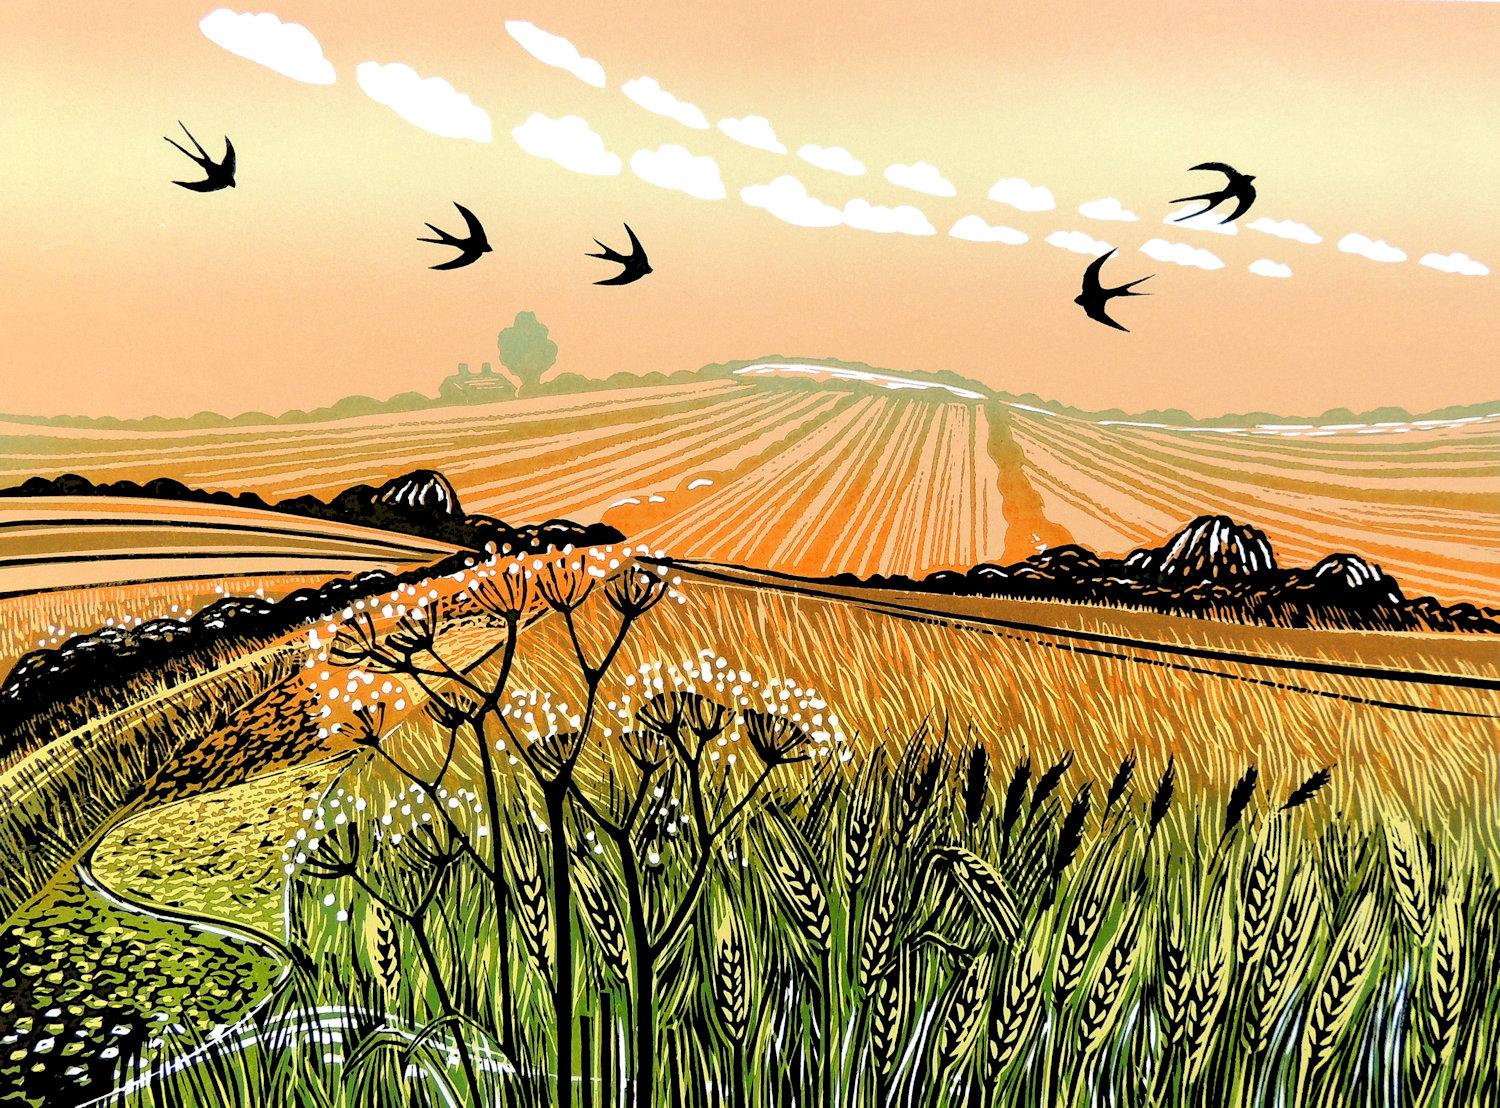 Rob Barnes Animal Print - Swallows in Summer, Mounted Linocut print, Landscape art, Nature, Birds